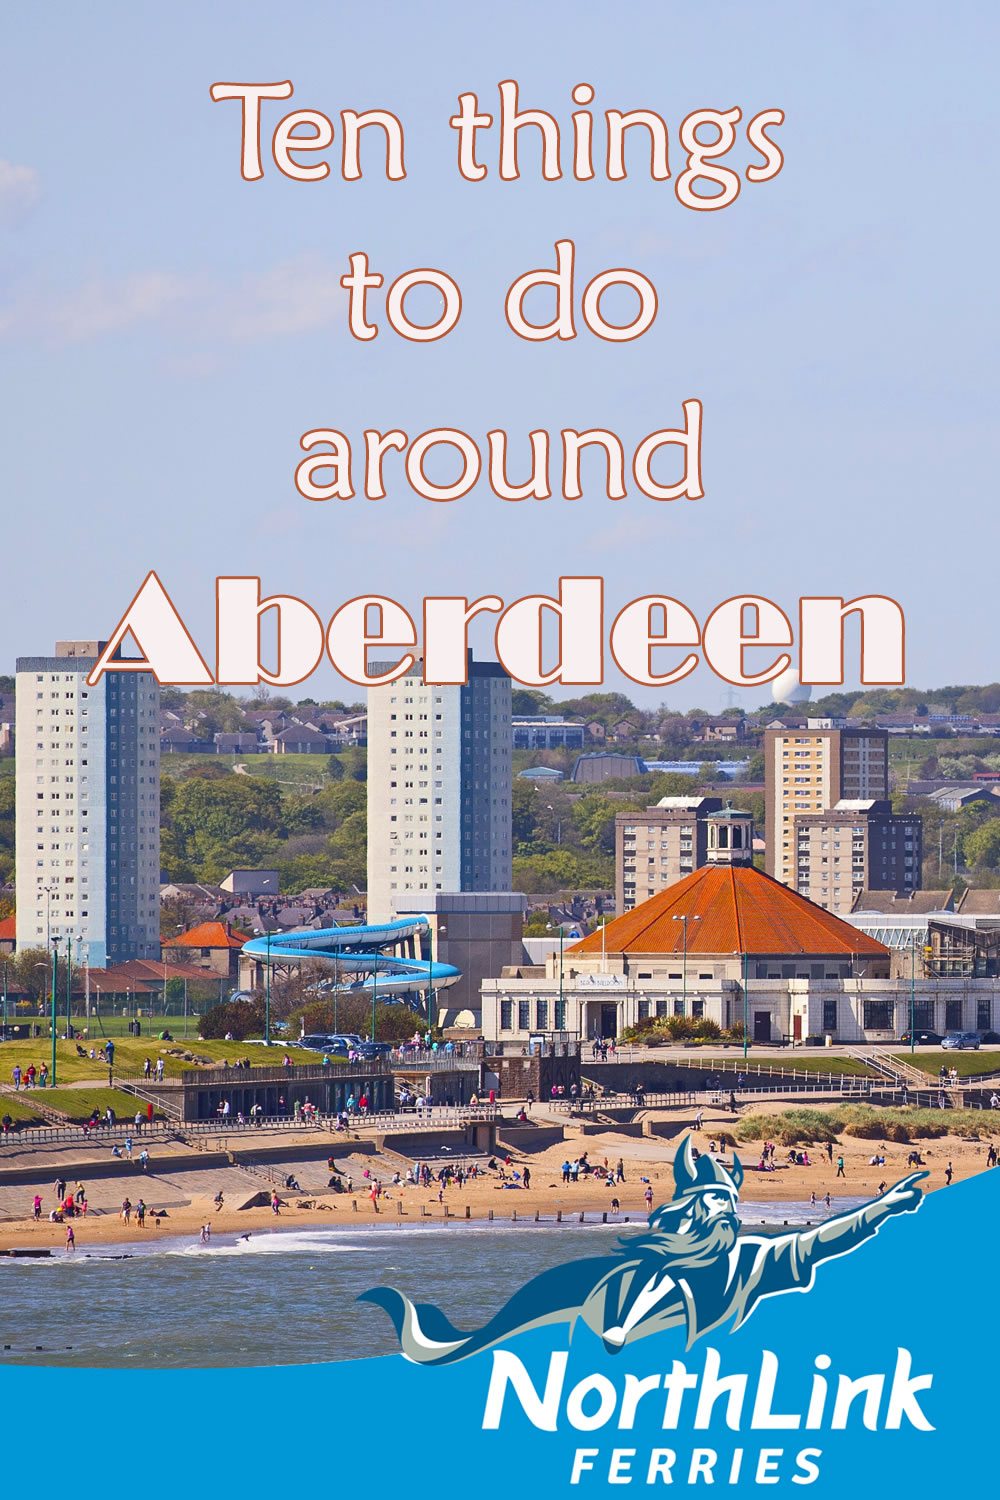 Ten things to do around Aberdeen